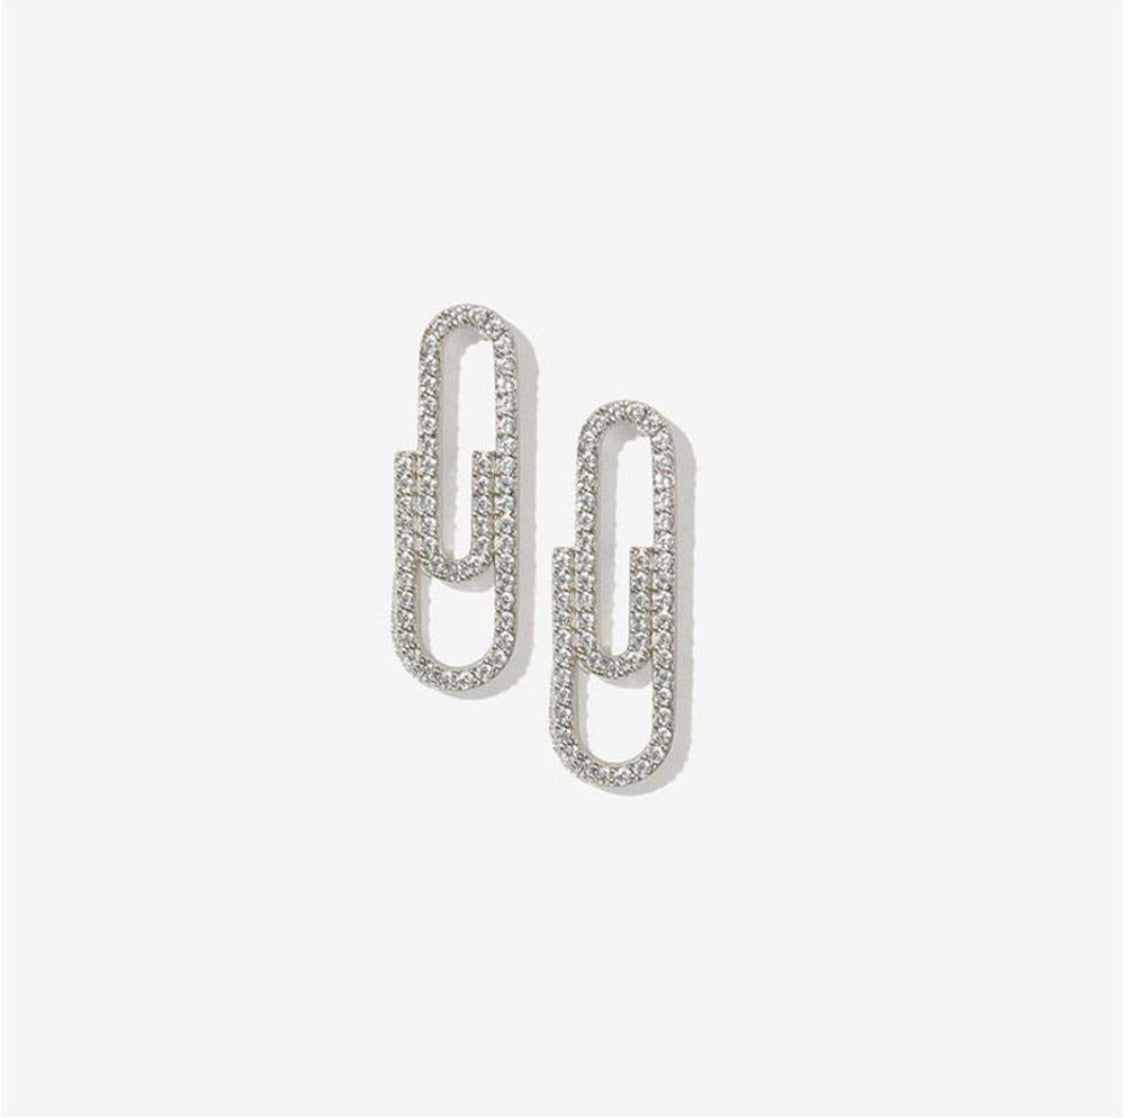 Rhinestone Paperclip Earrings